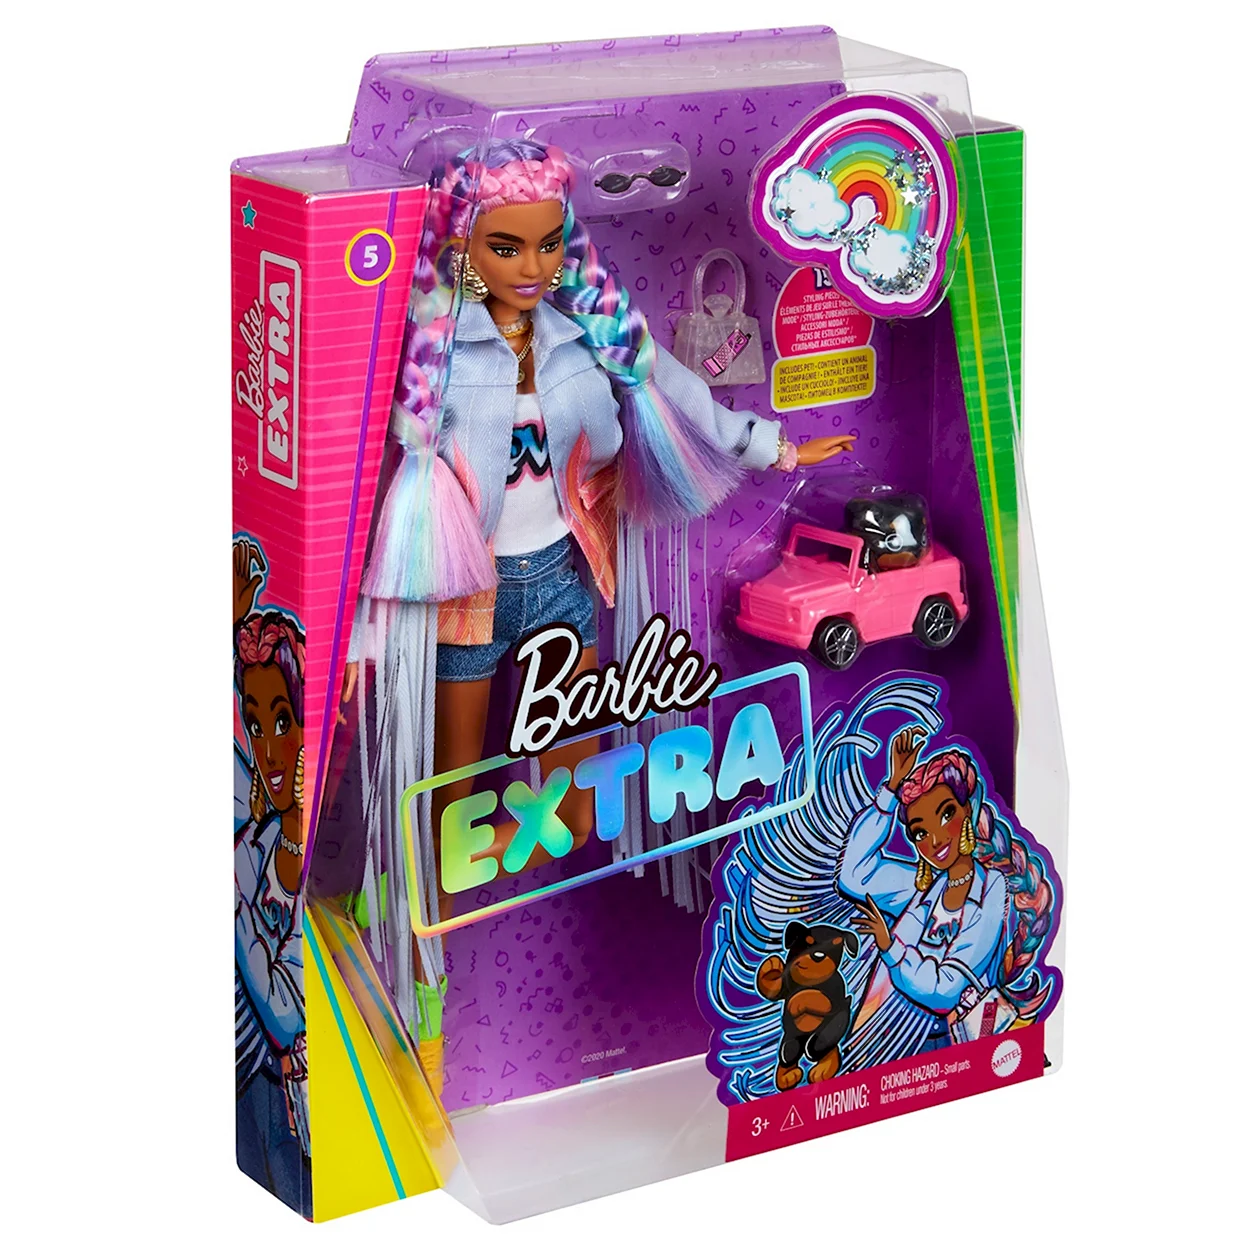 Кукла Barbie Экстра с радужными косичками grn29. Игрушка